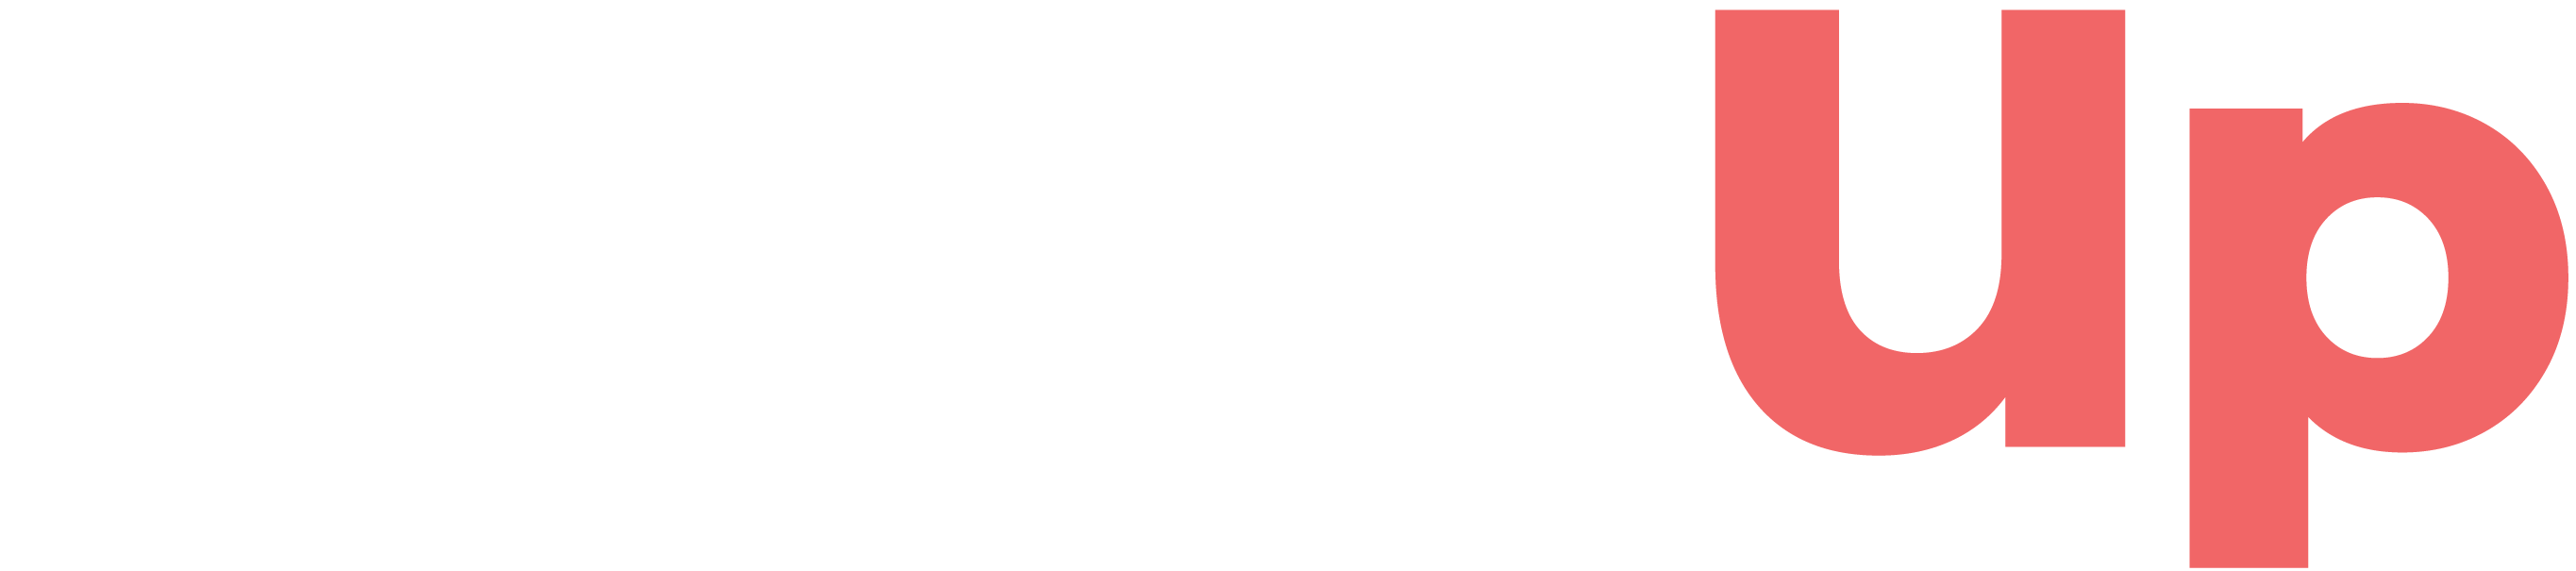 scaleup logo